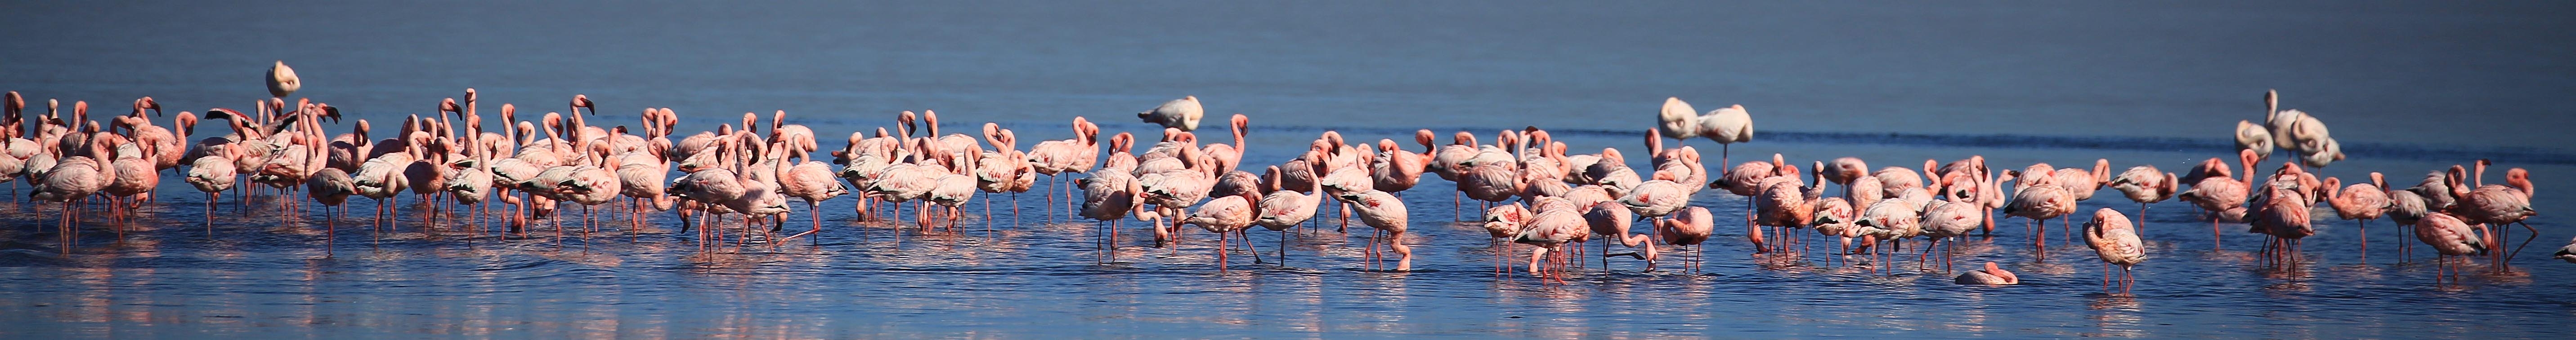 Flamingos in Walvis Bay Lagoon, Namibia